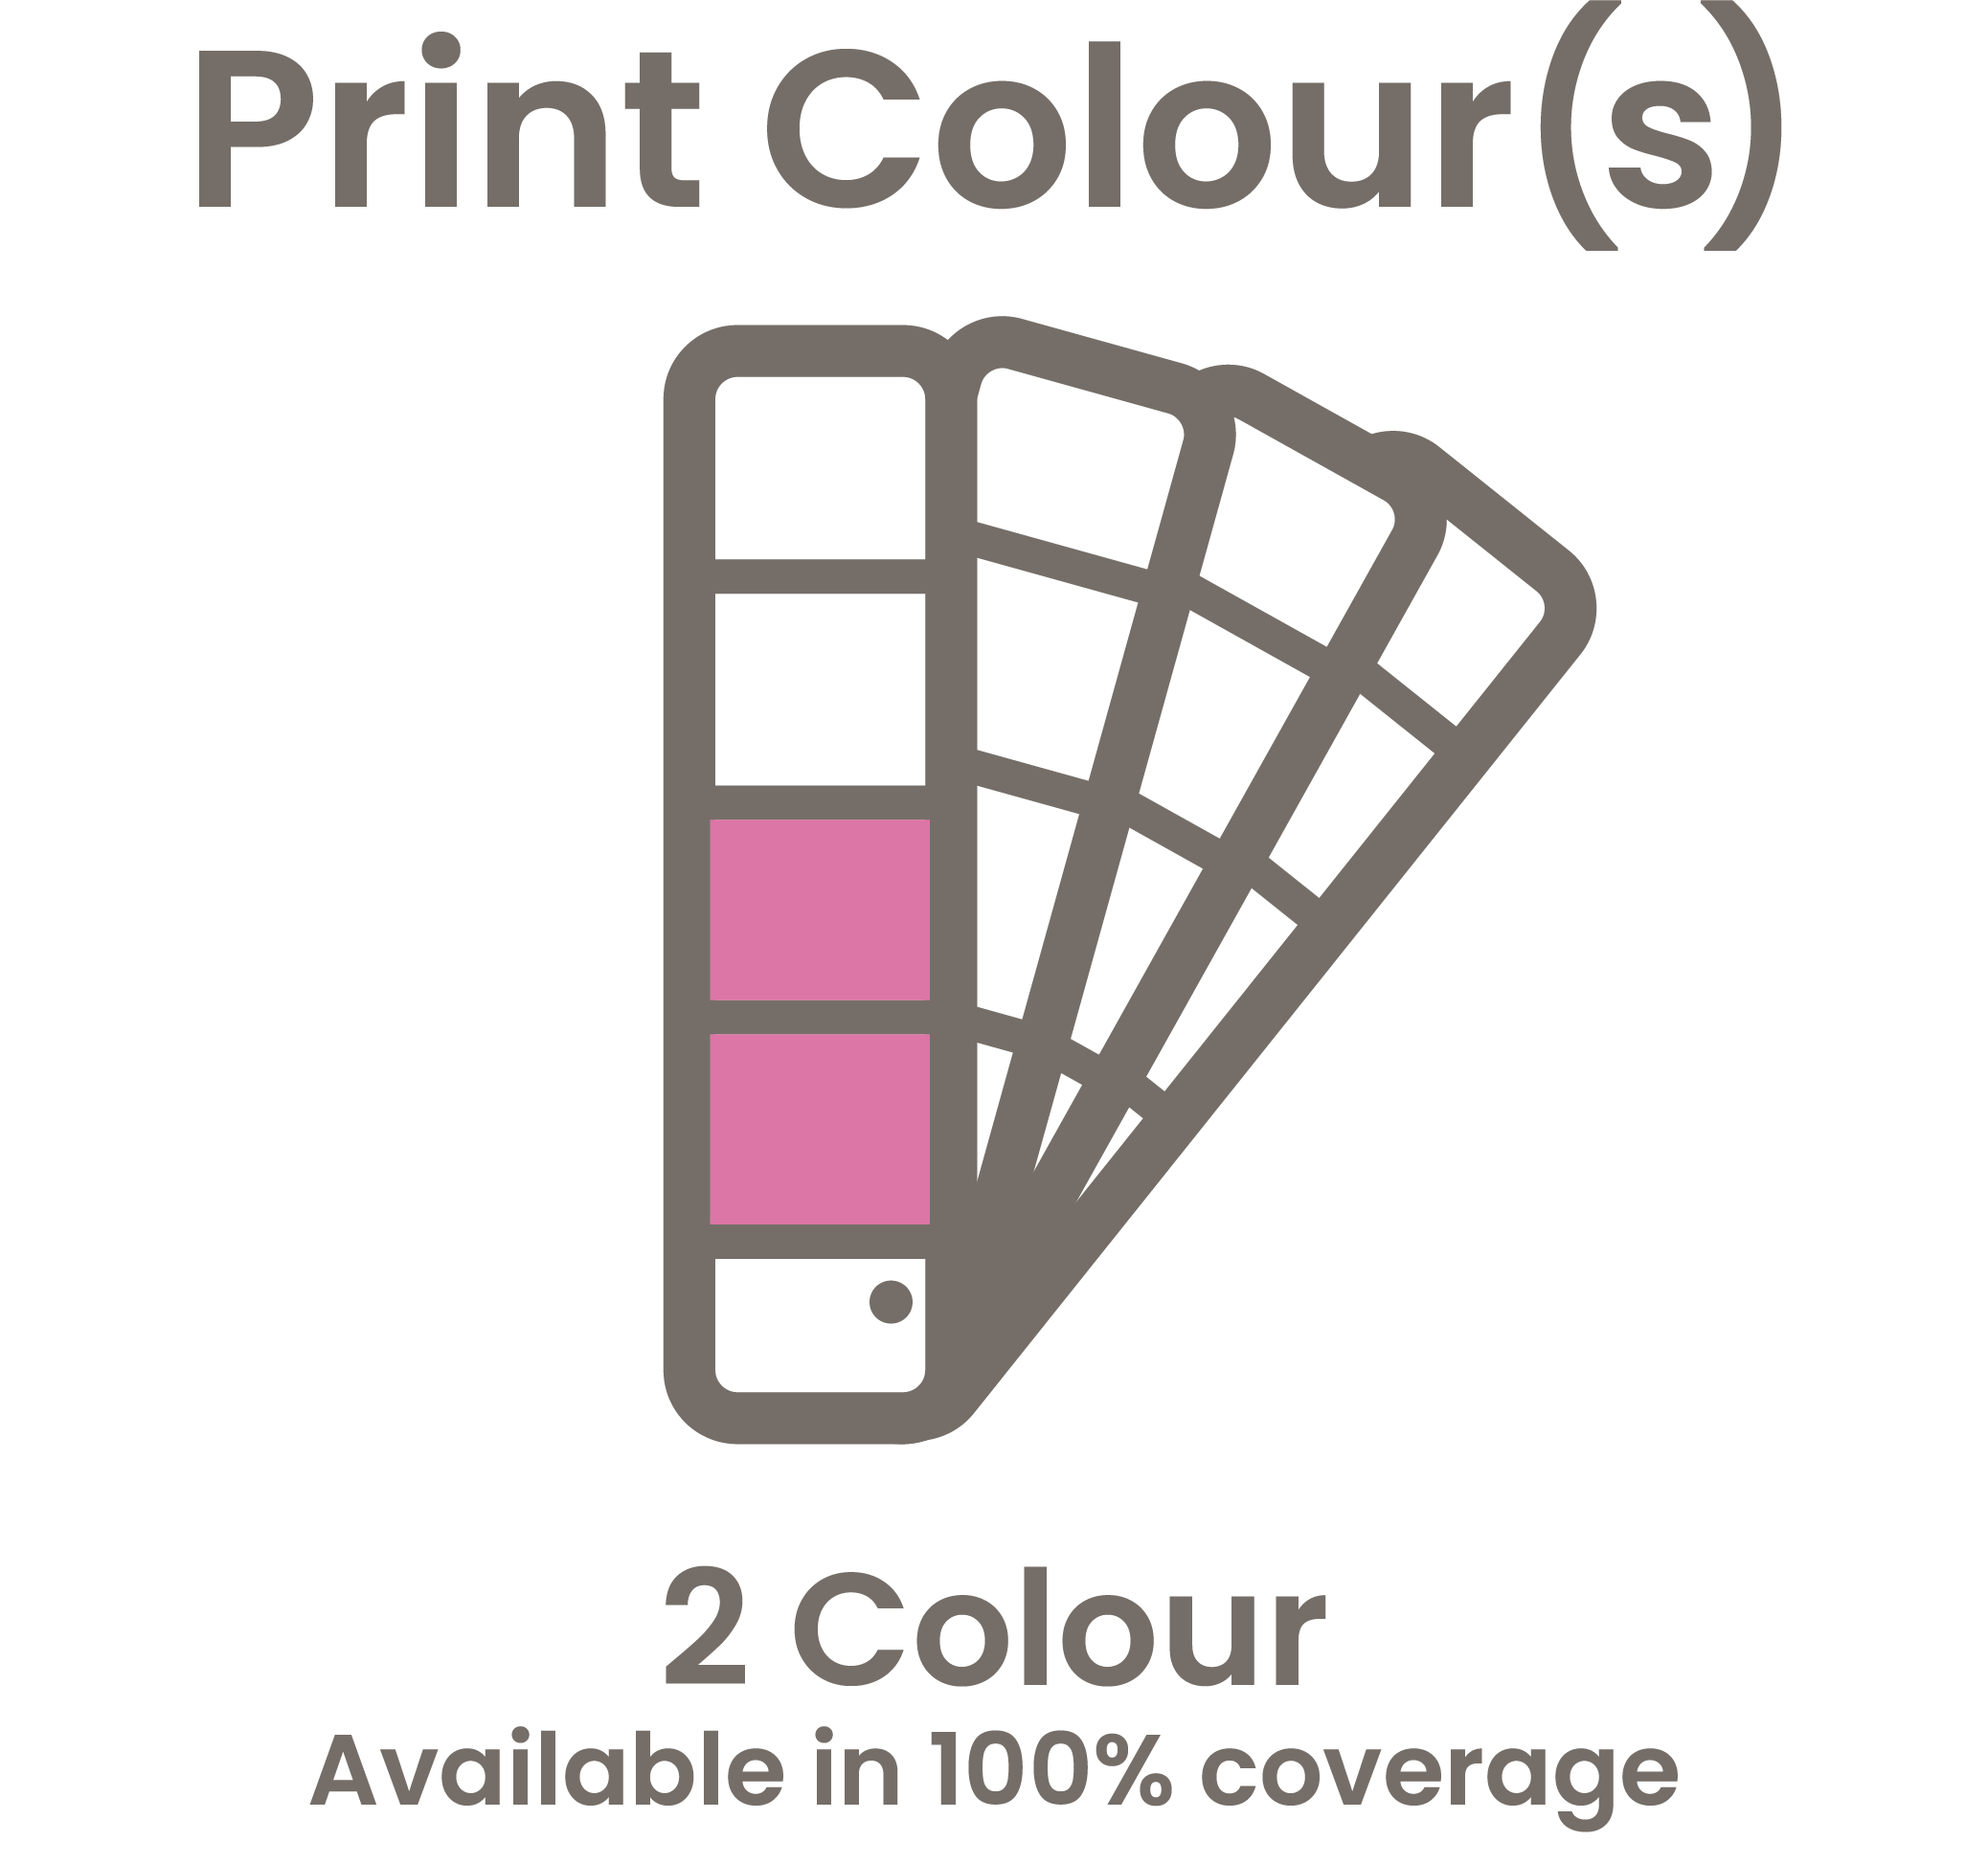 Print Colour